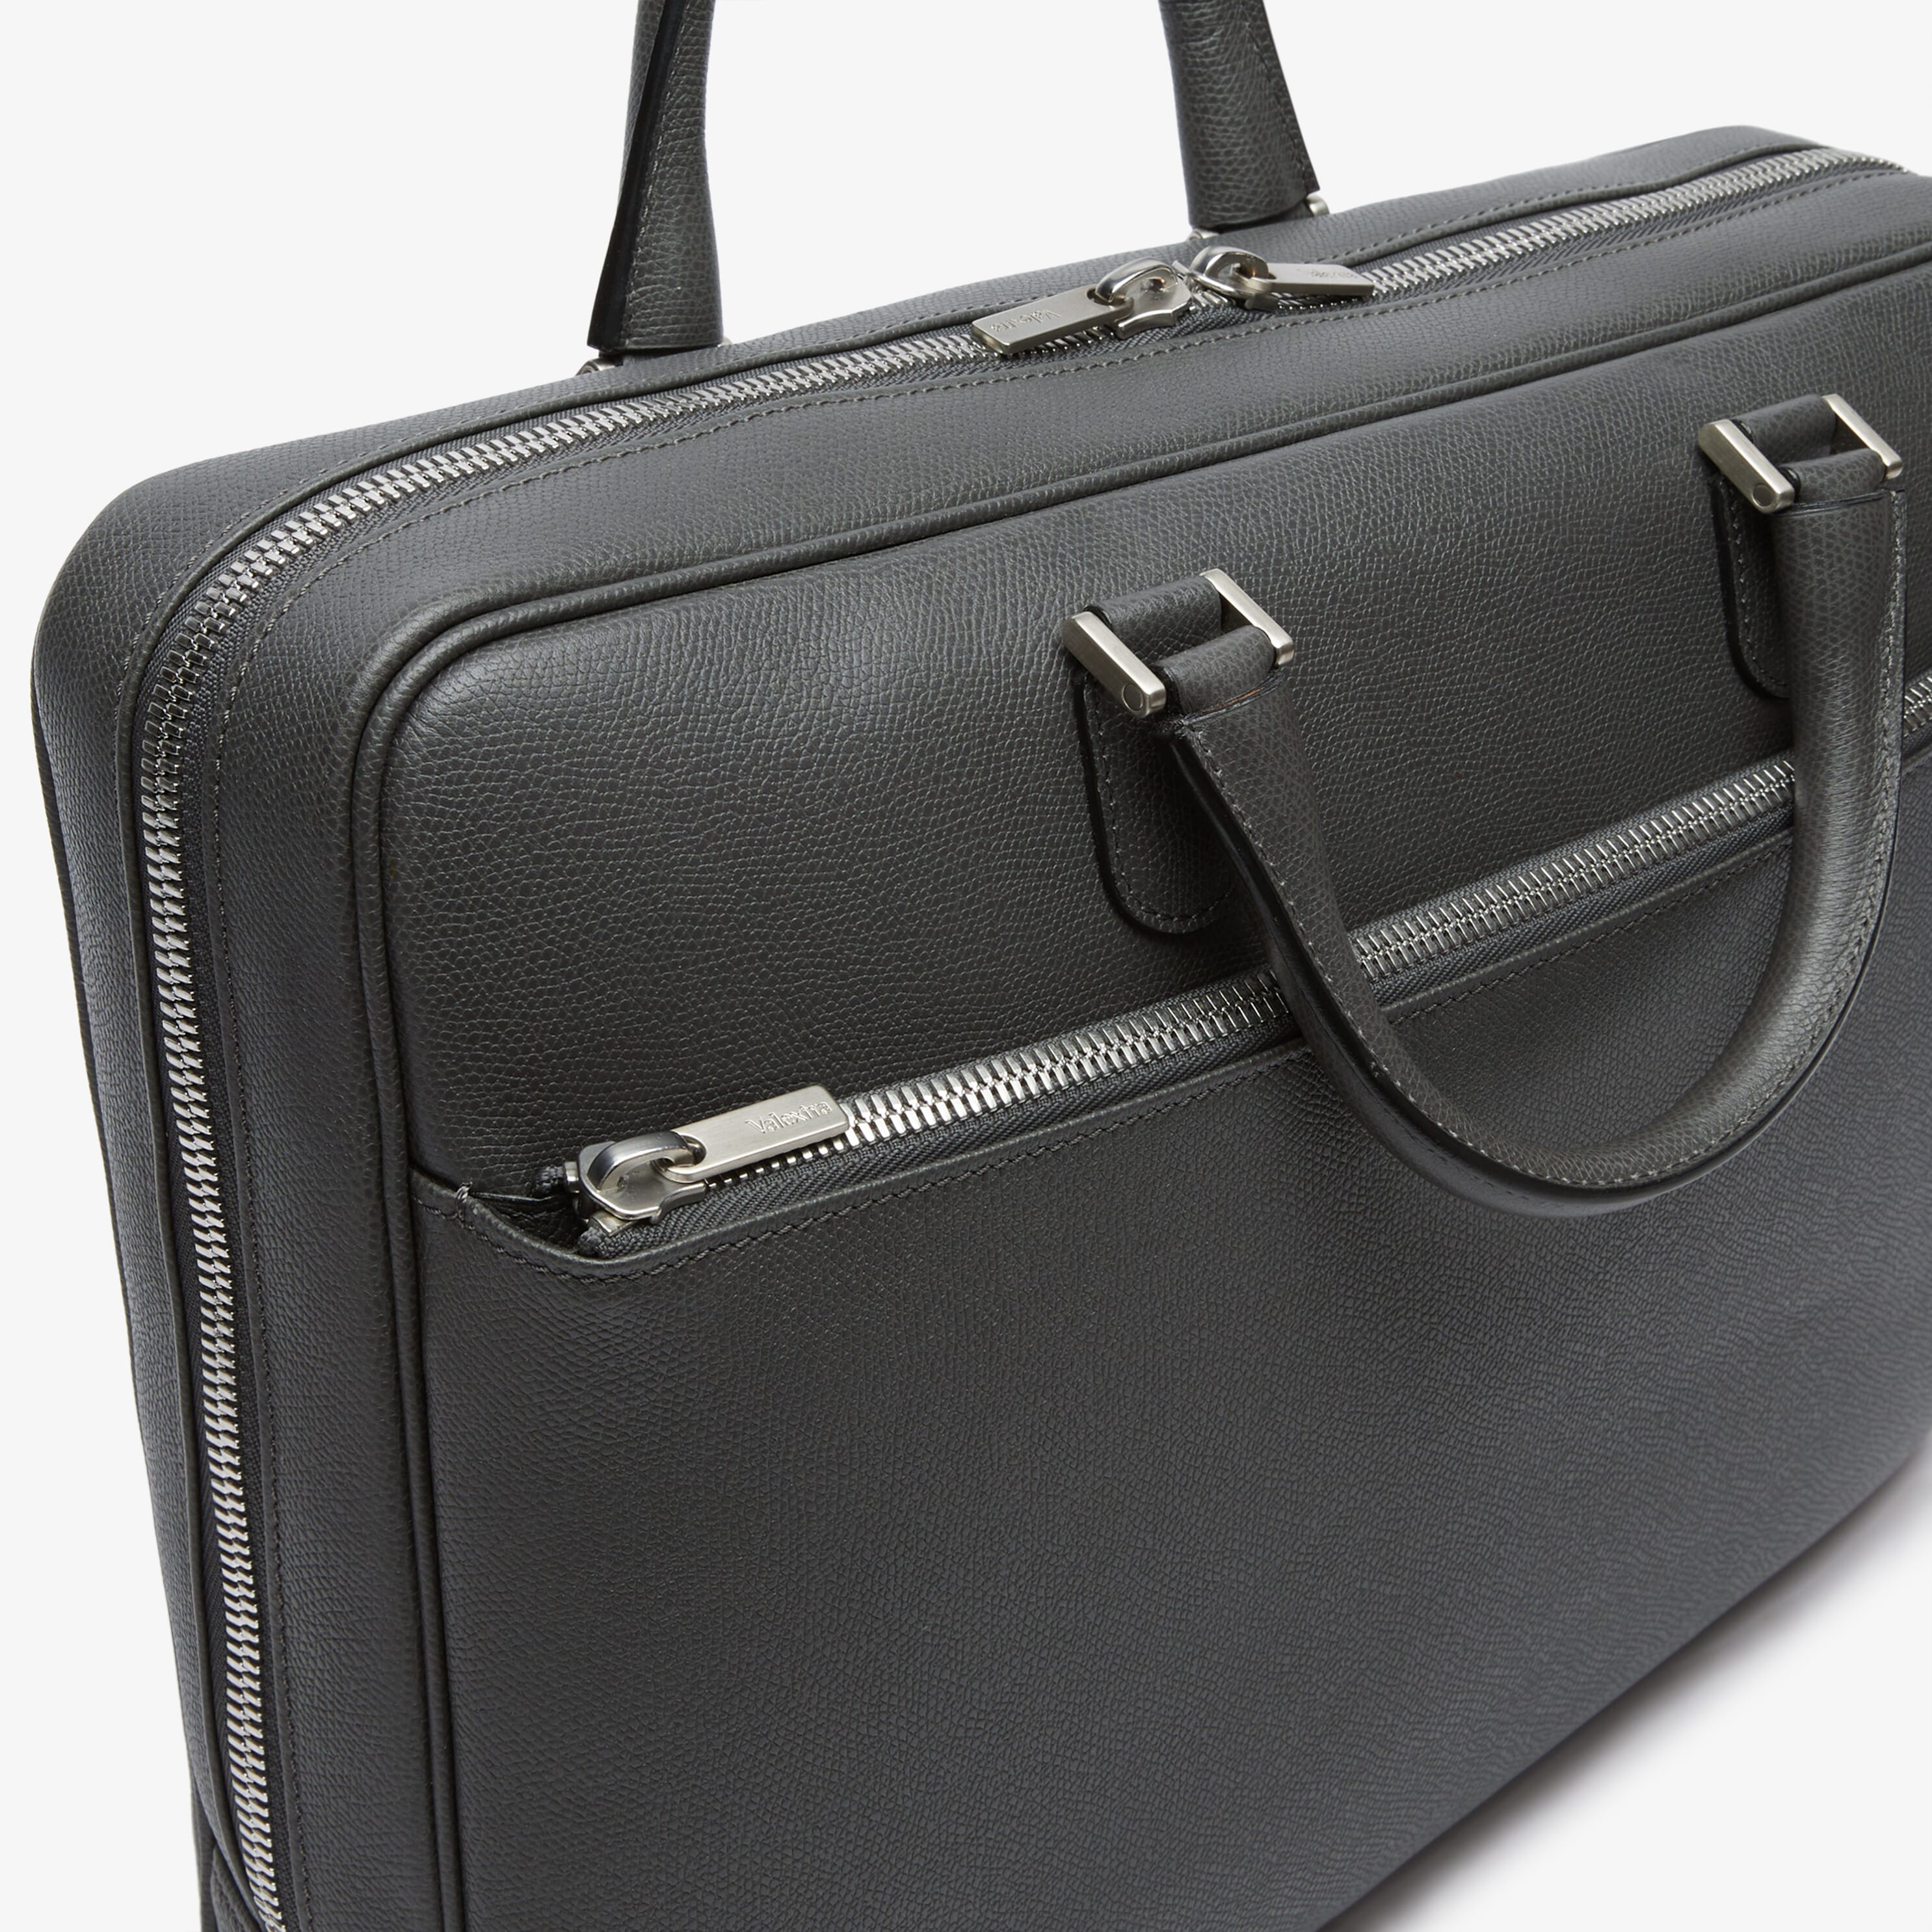 Avietta Briefcase with Zip 24h - Smokey Grey - Vitello VS - Valextra - 4